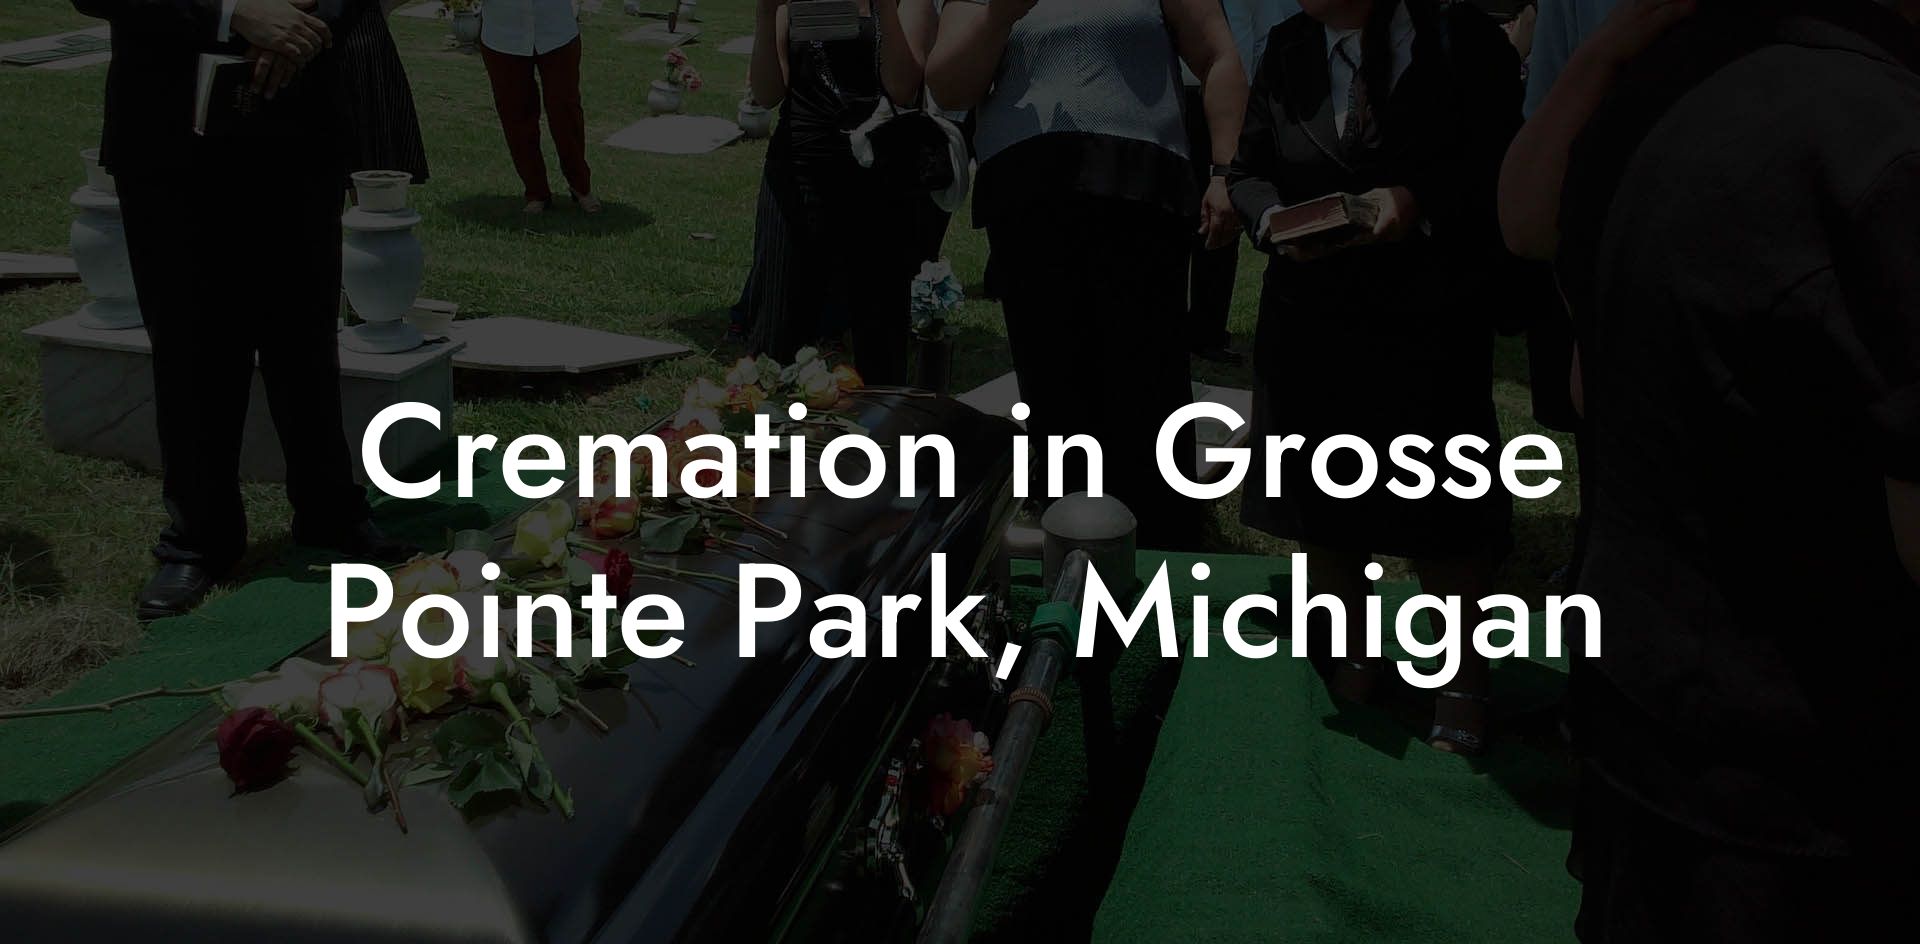 Cremation in Grosse Pointe Park, Michigan